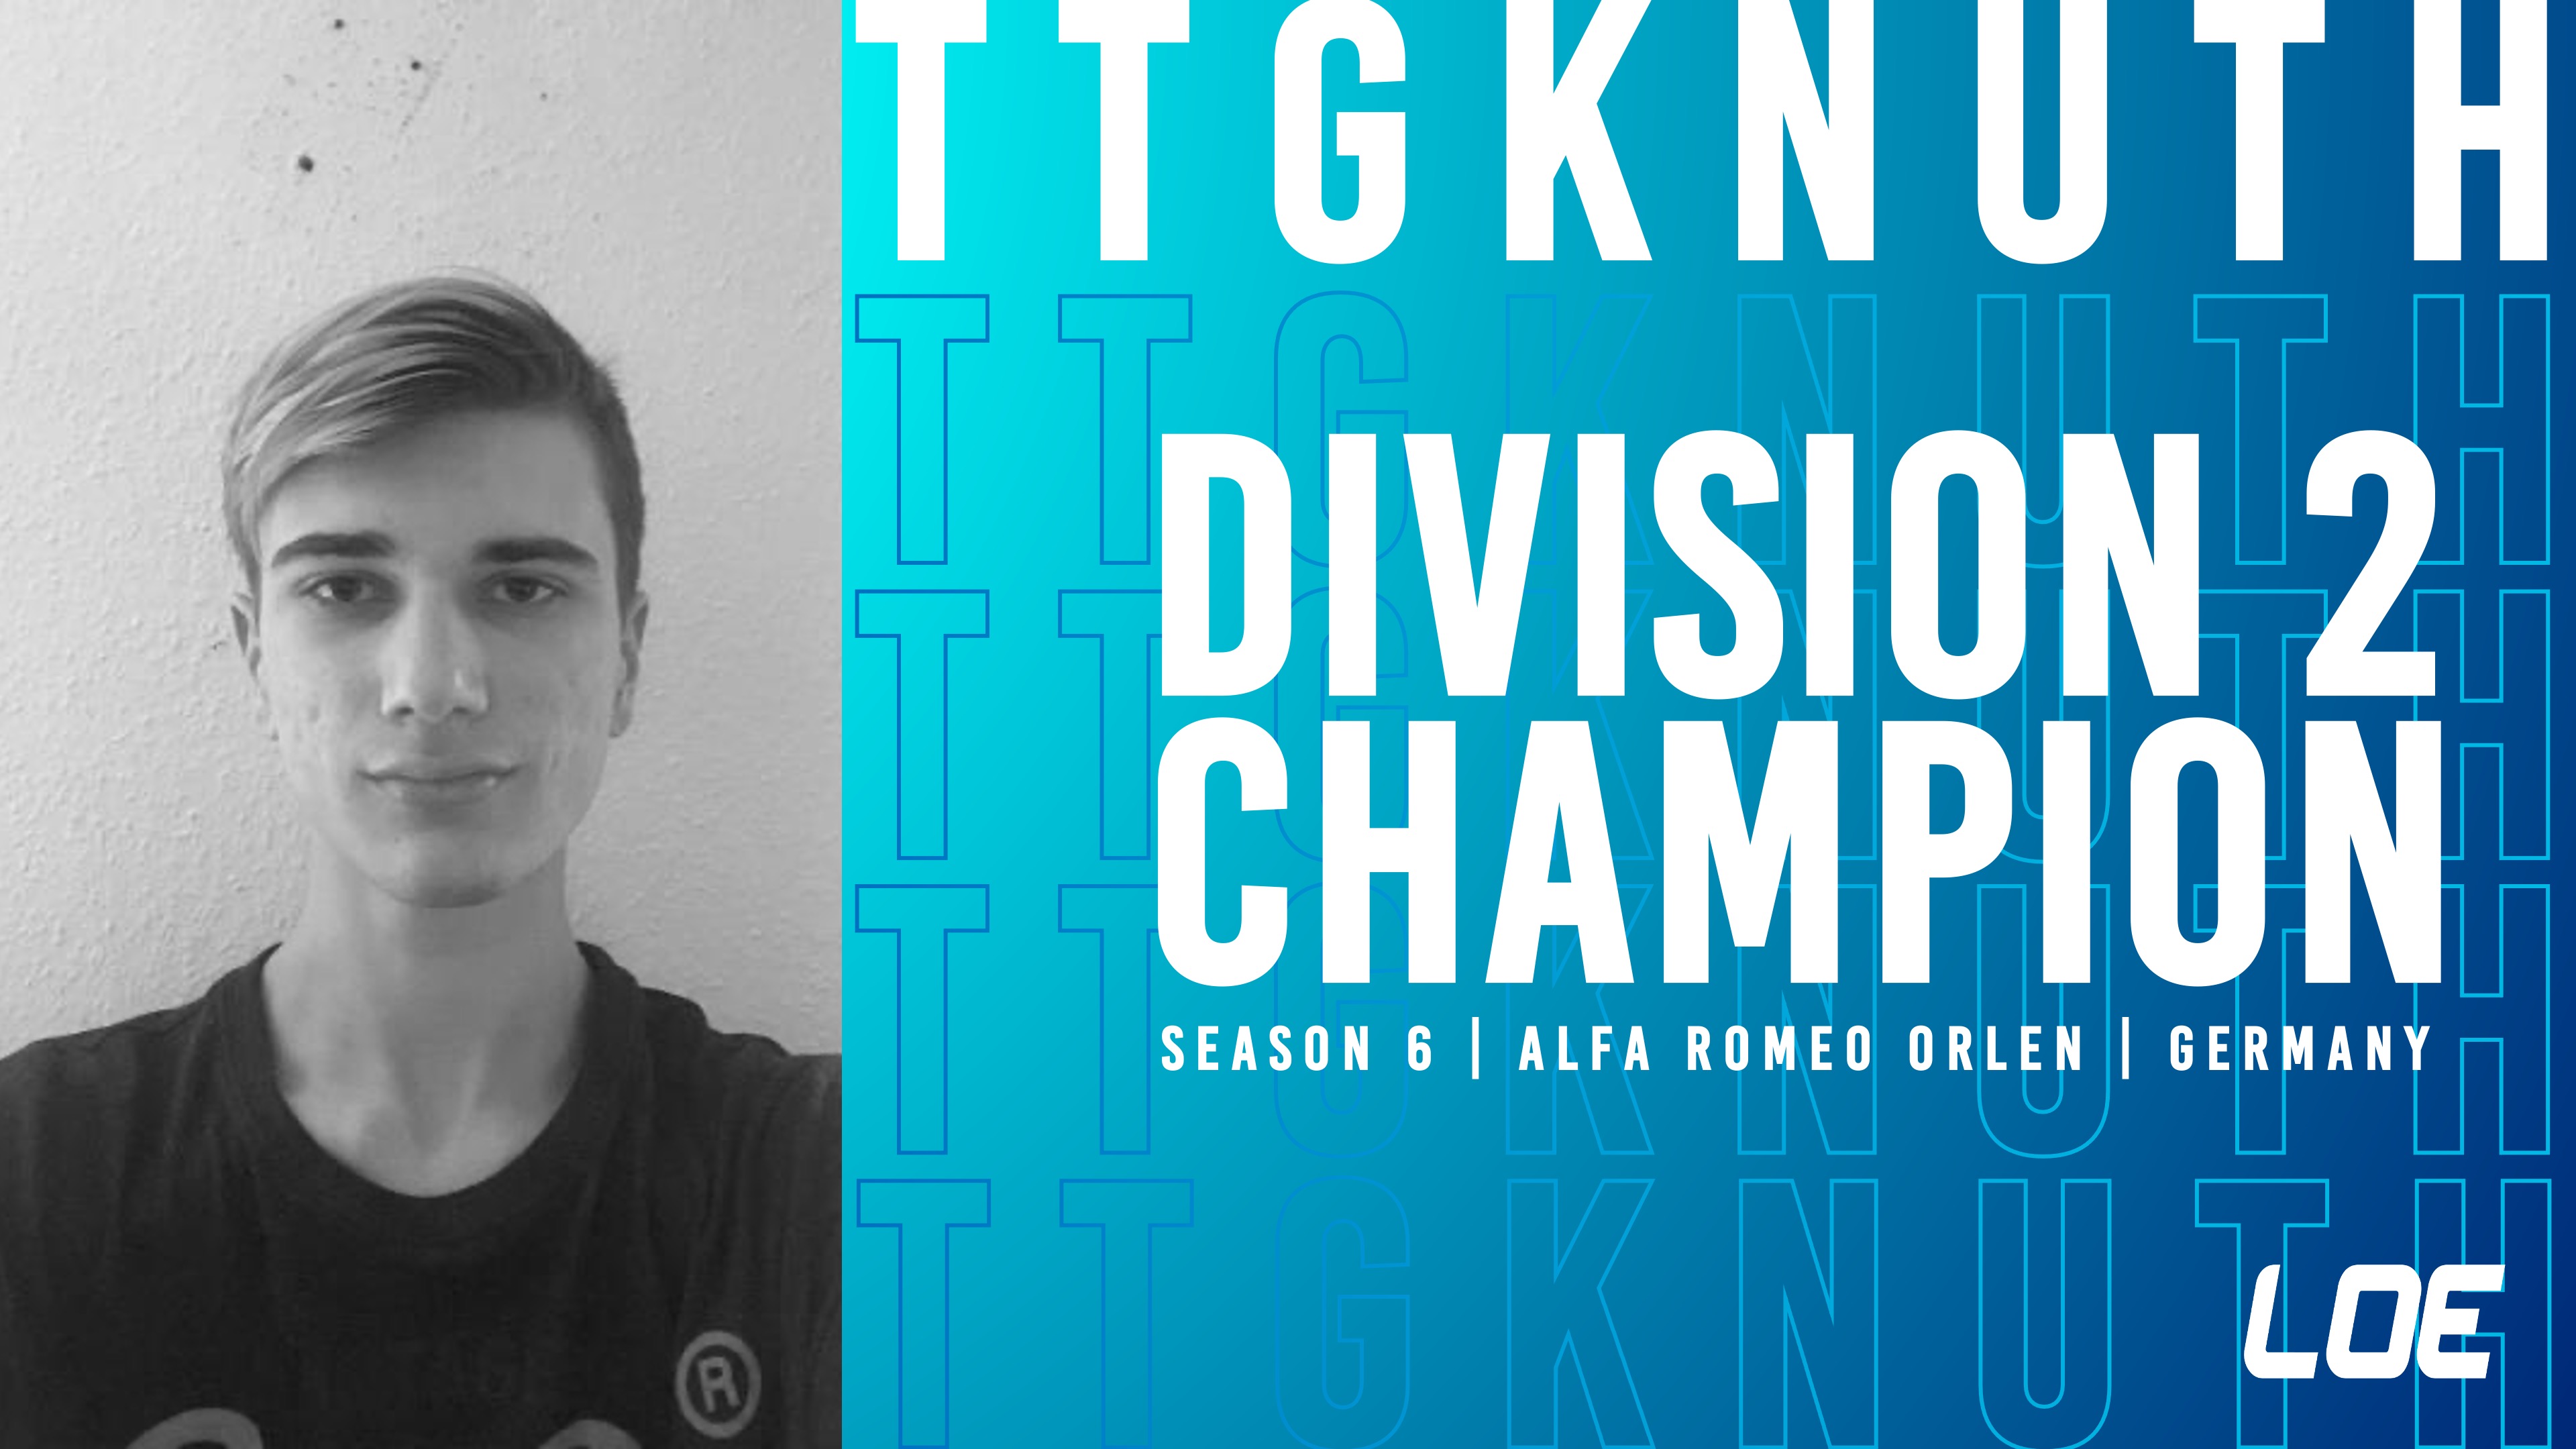 Division 2 Champion - TTG_Knuth